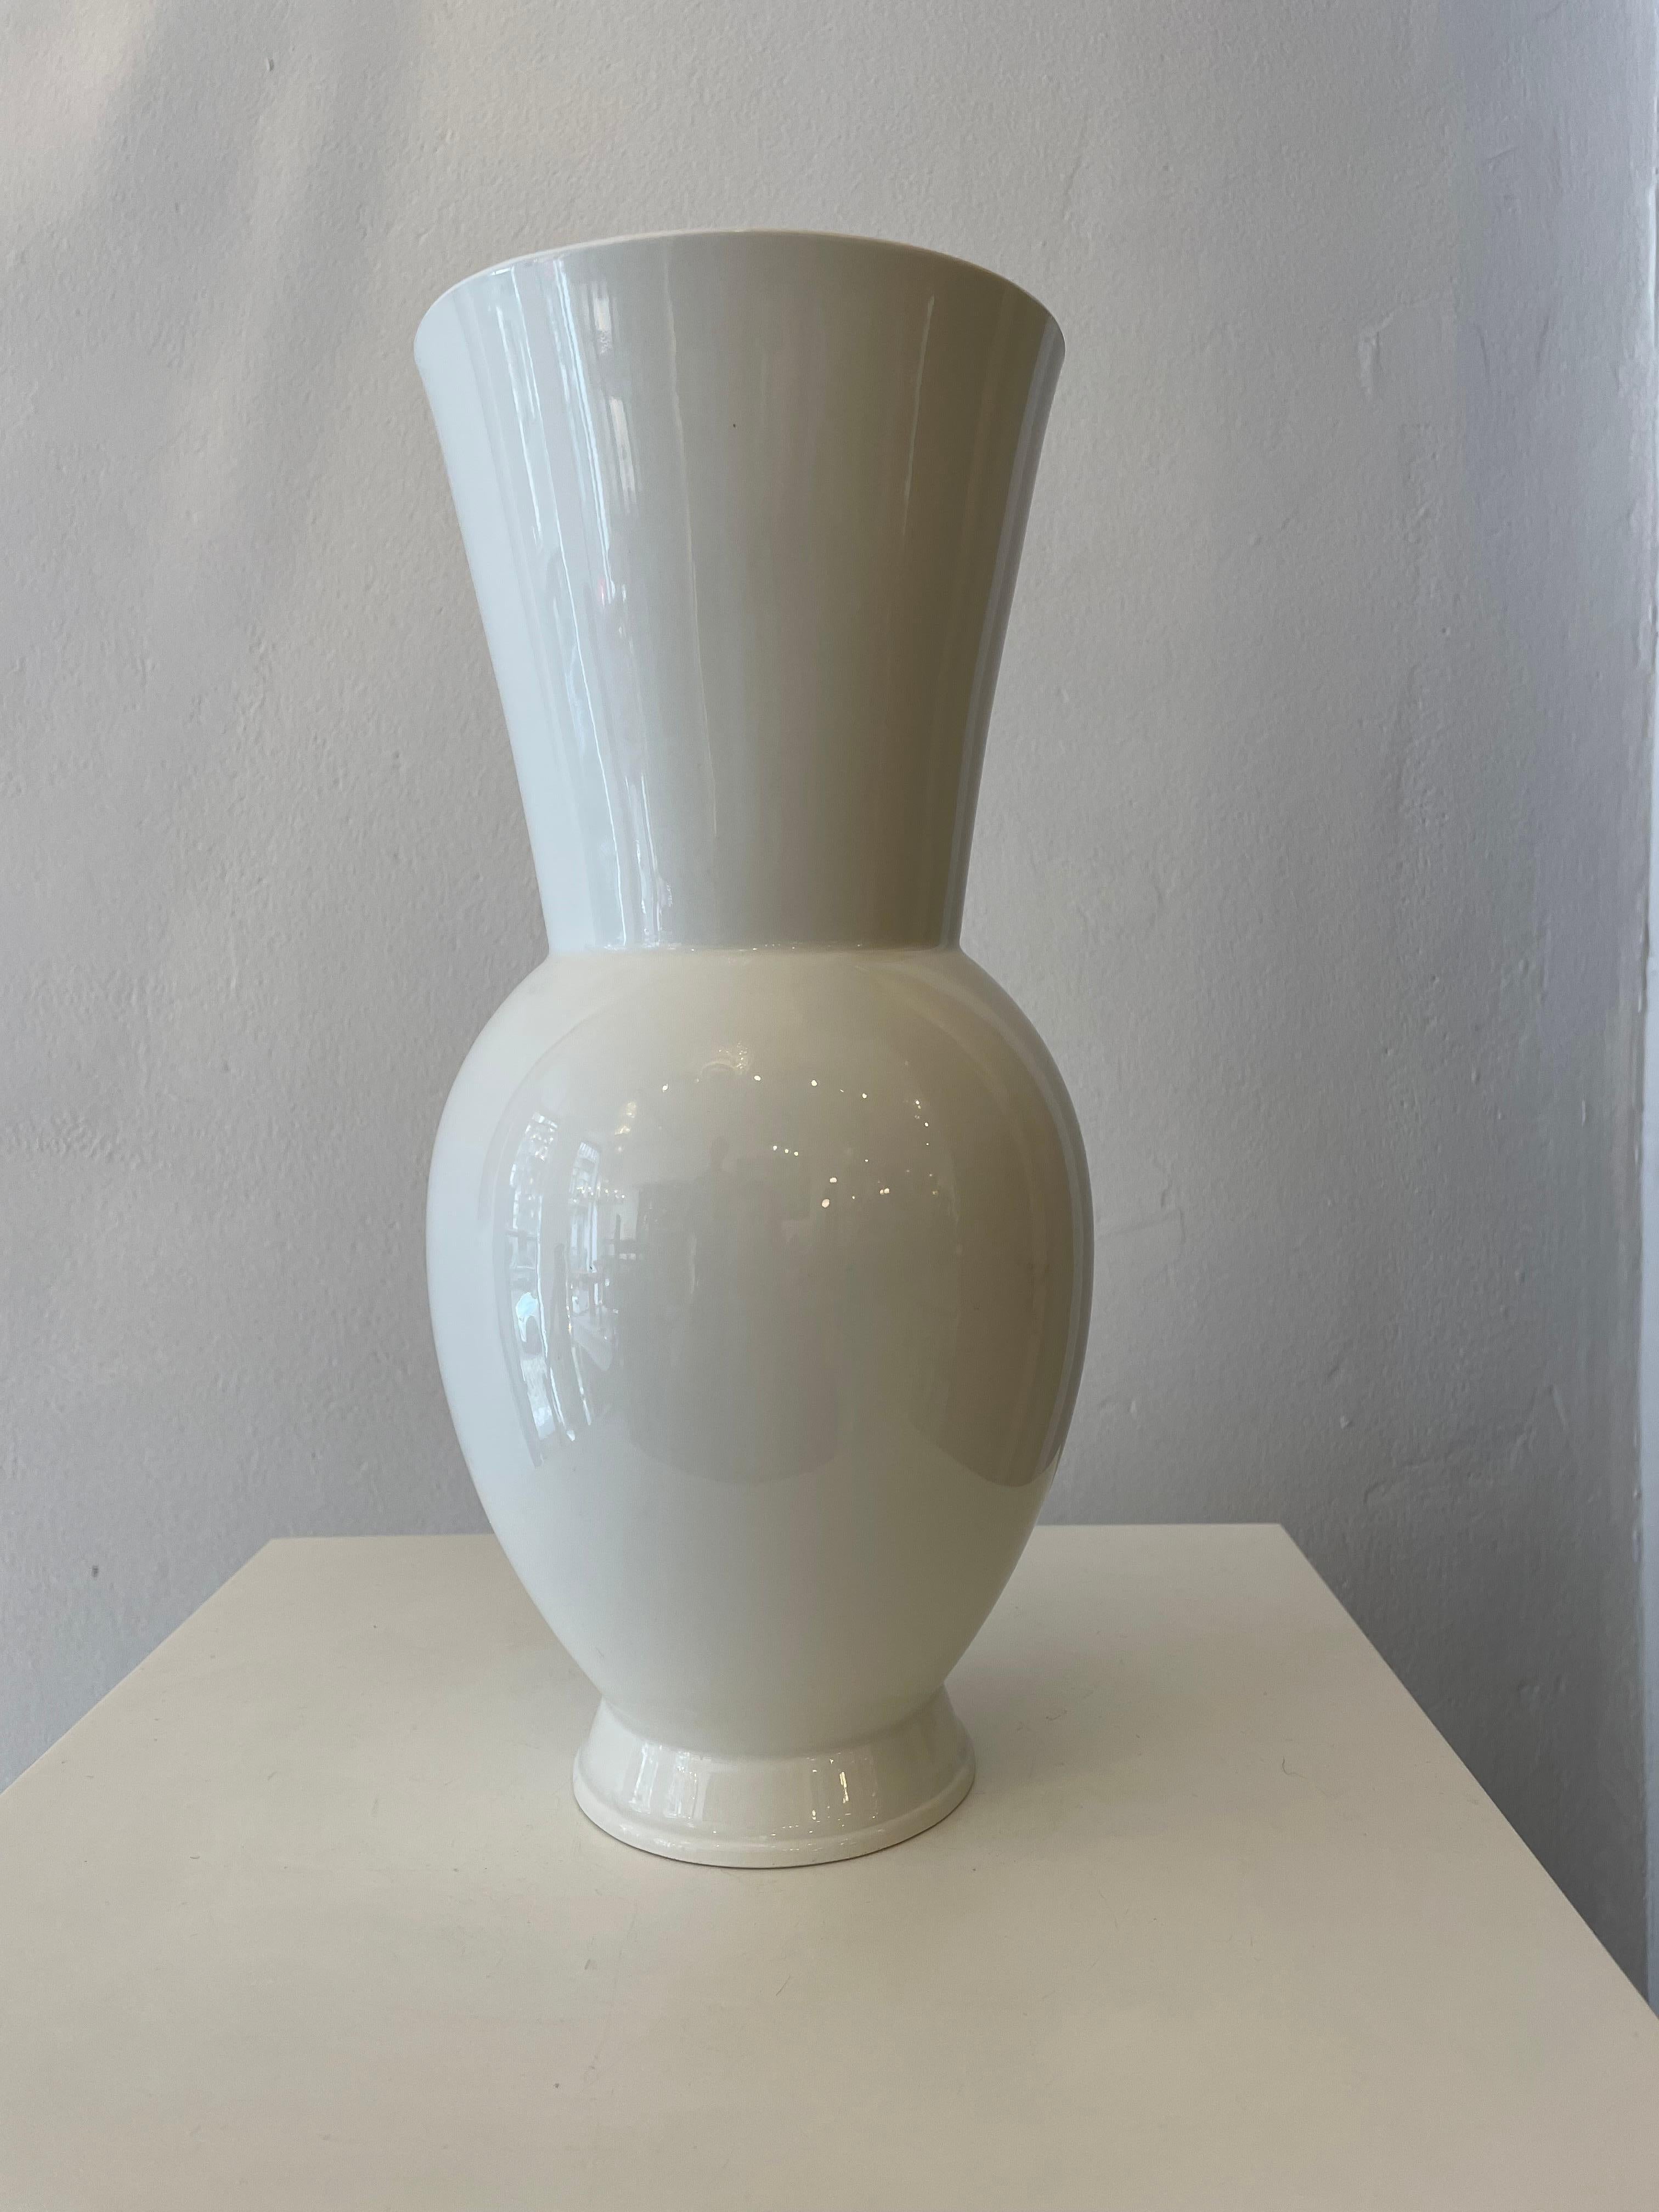 White ceramic vase by Marianne Brandt, Germany, Bauhaus, 1920s.